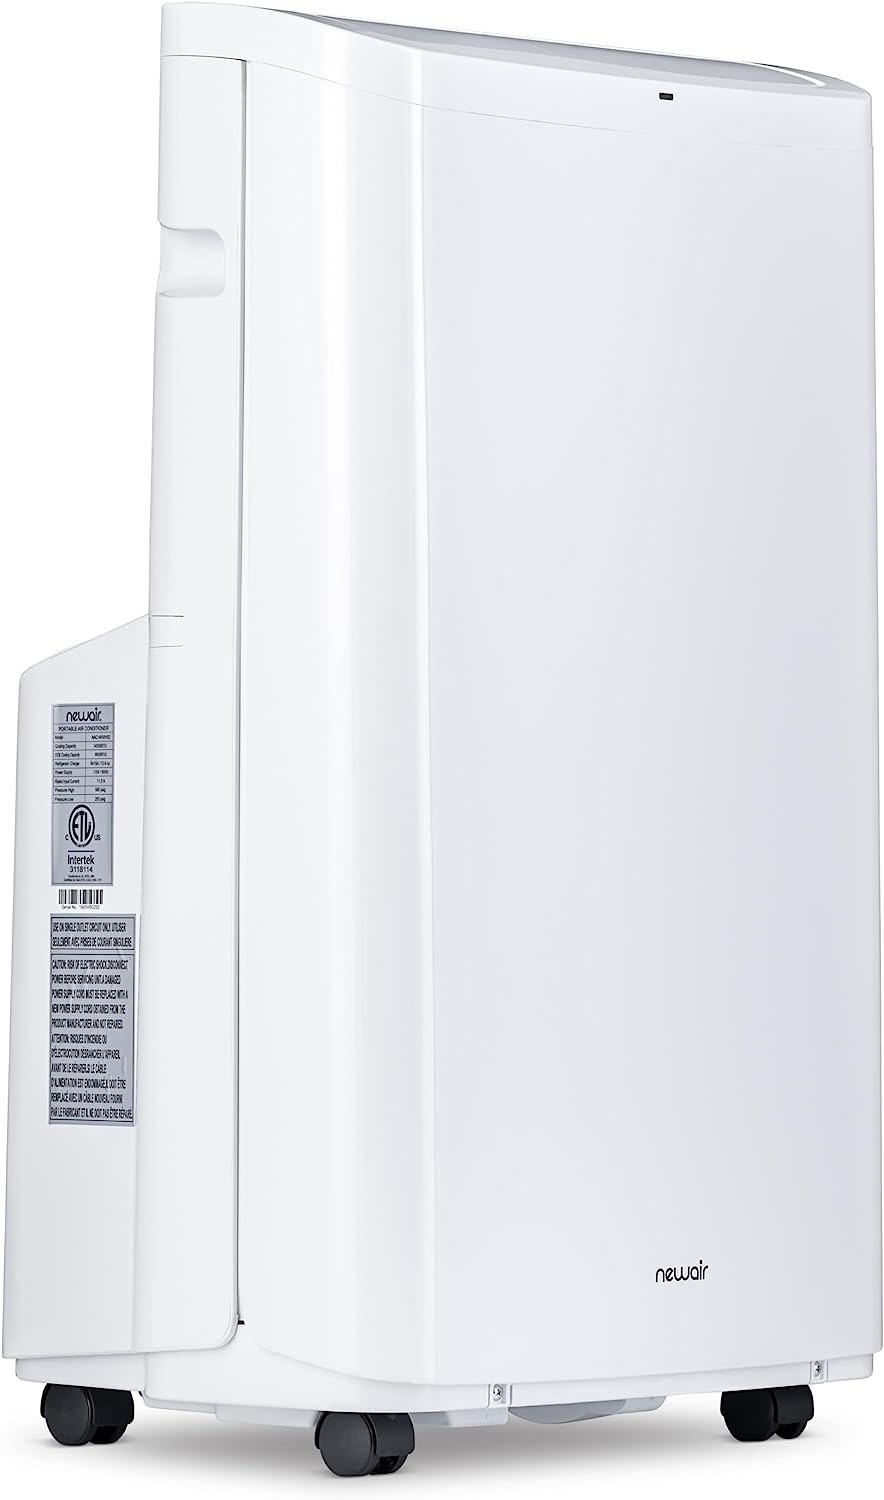 Newair 13,500 BTU Portable Air Conditioner w/ Easy Window Kit (Refurbished) $325 + Free Shipping